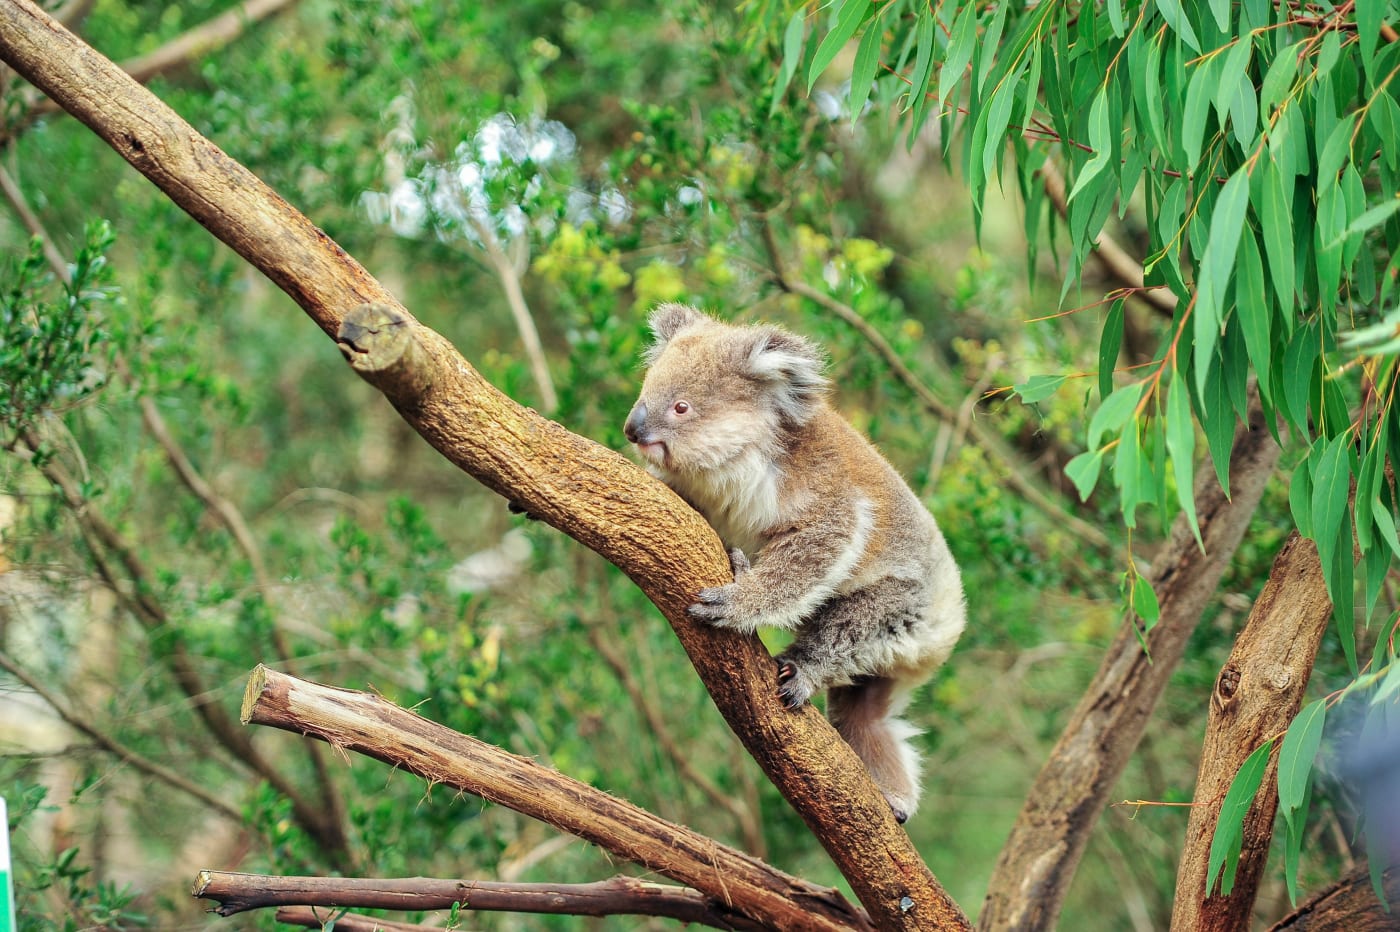 A wild koala (Phascolarctos cinereus) climbing in its natural habitat of gum trees.